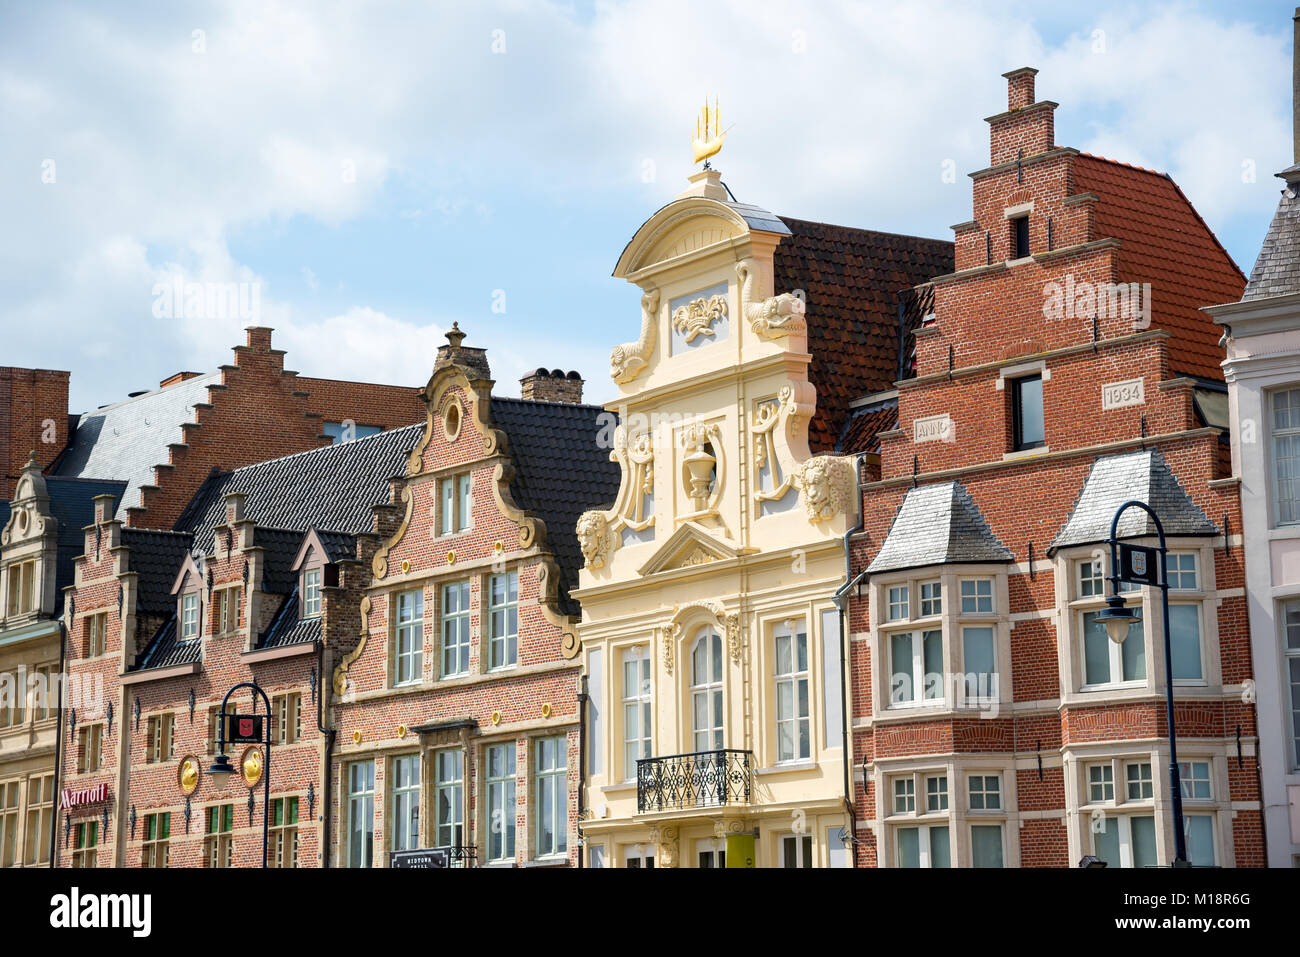 Ghent, Belgium - April 16, 2017: Row of historic colorful medieval buildings in Ghent, Belgium Stock Photo